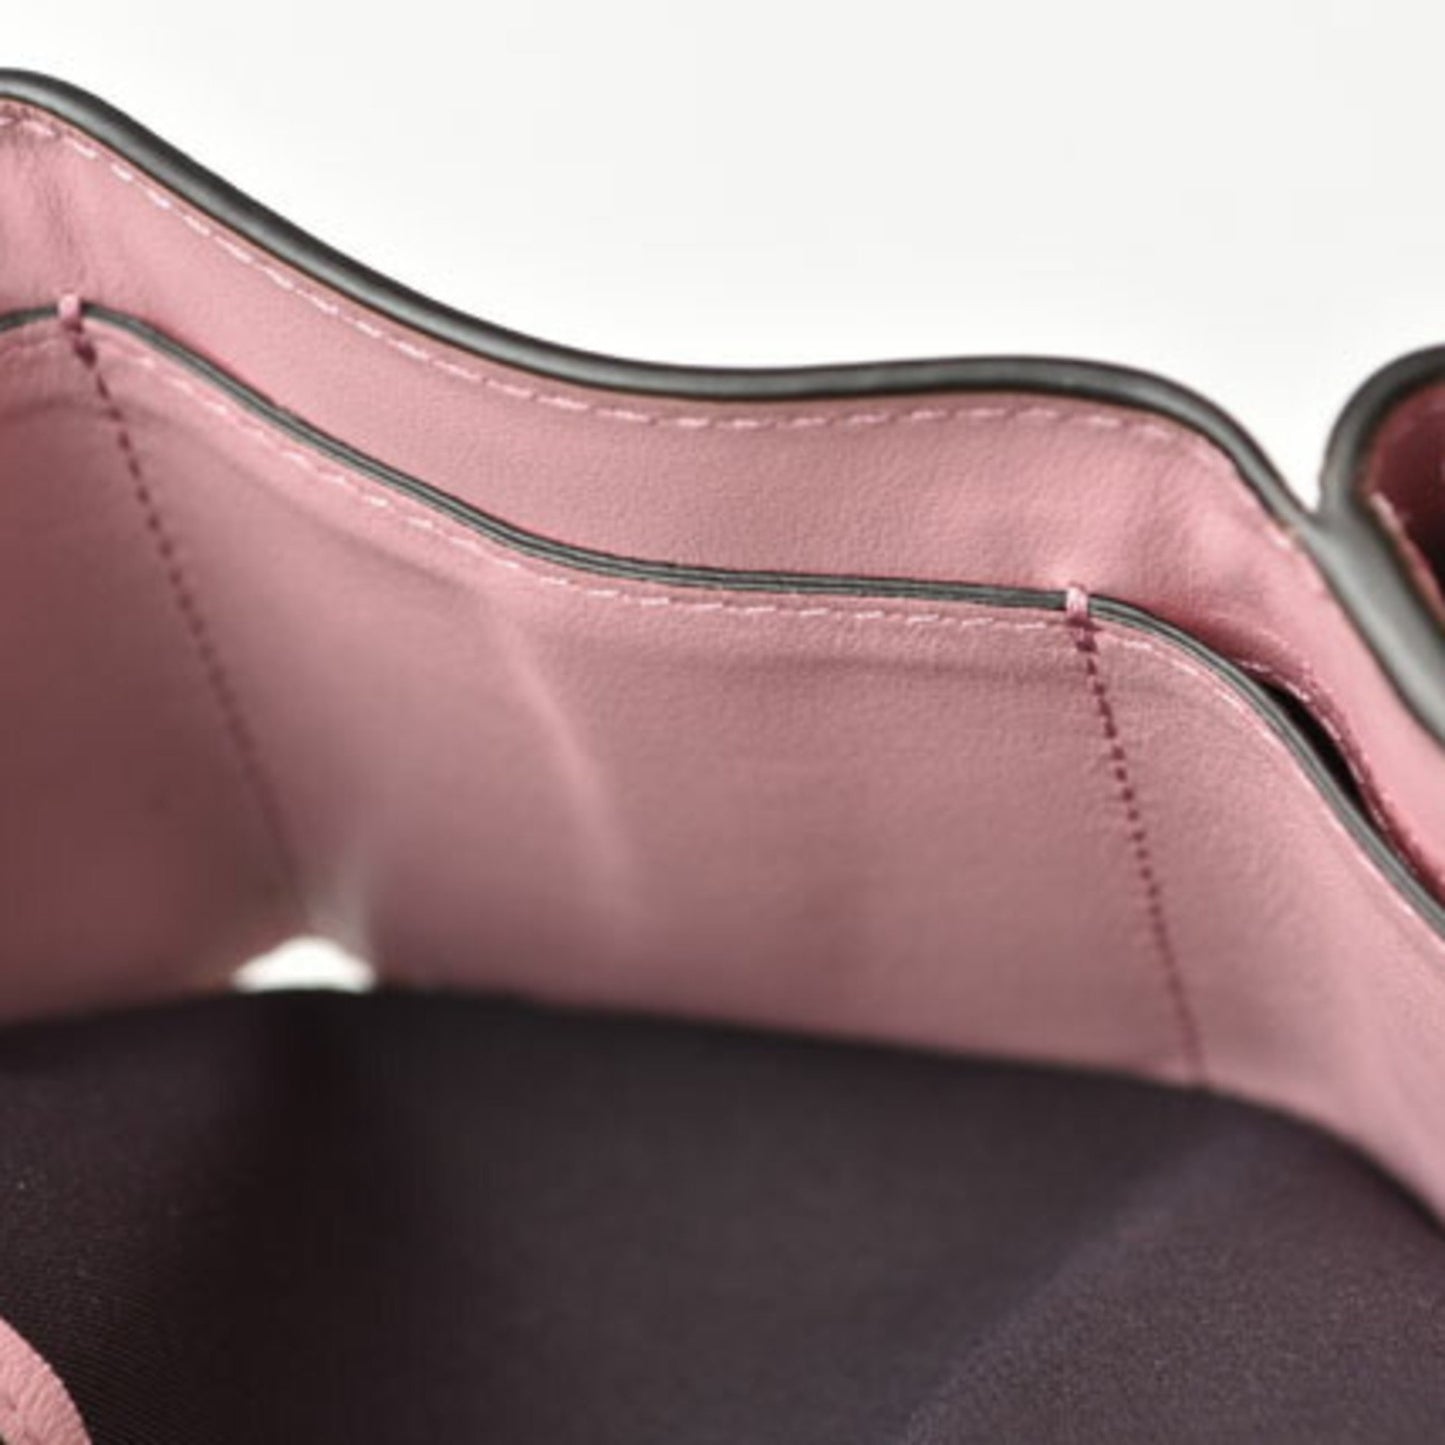 Fendi Women's Stylish Pink Leather Tri-Fold Wallet in Pink